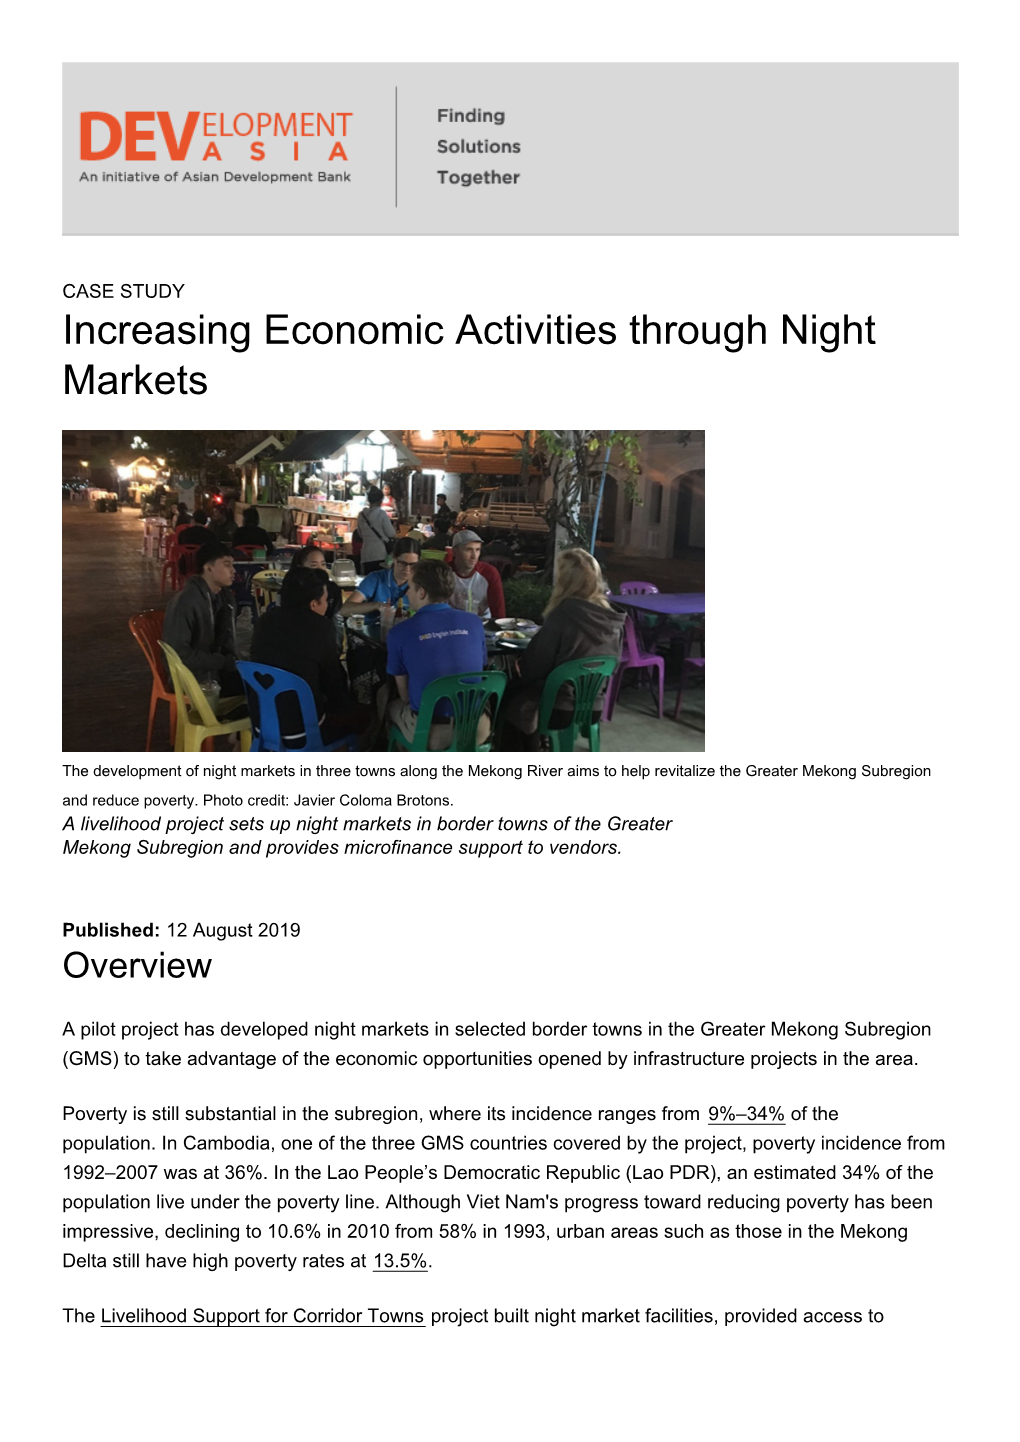 Increasing Economic Activities Through Night Markets